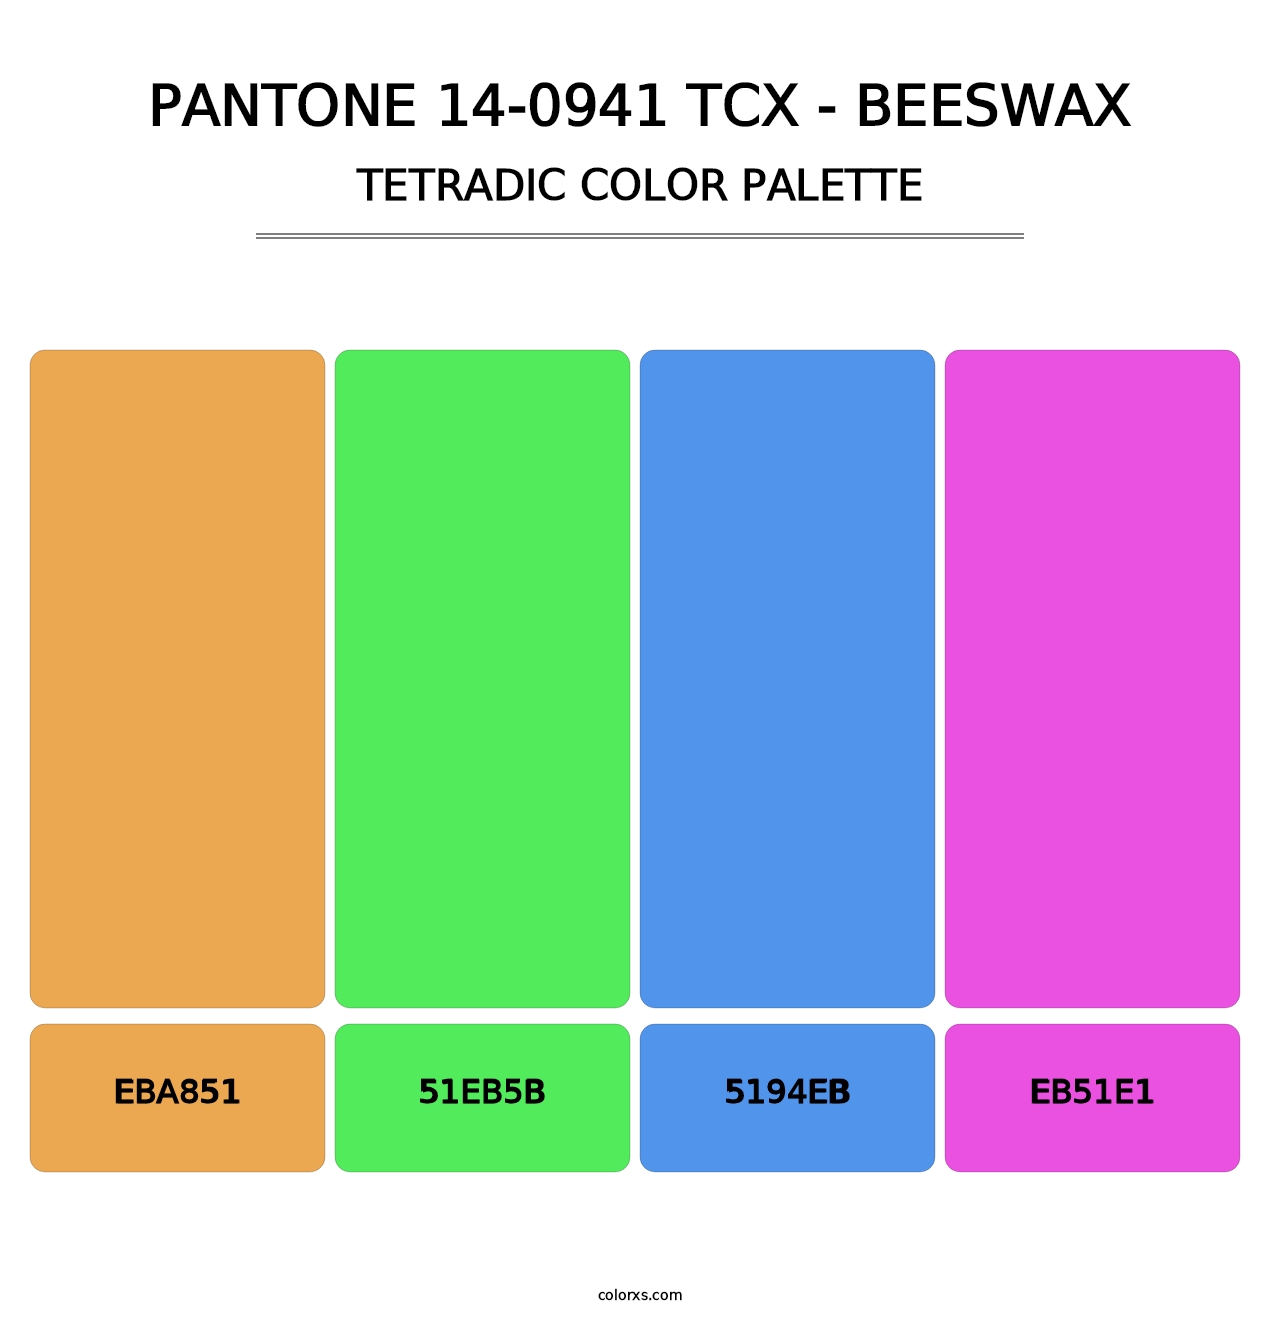 PANTONE 14-0941 TCX - Beeswax - Tetradic Color Palette